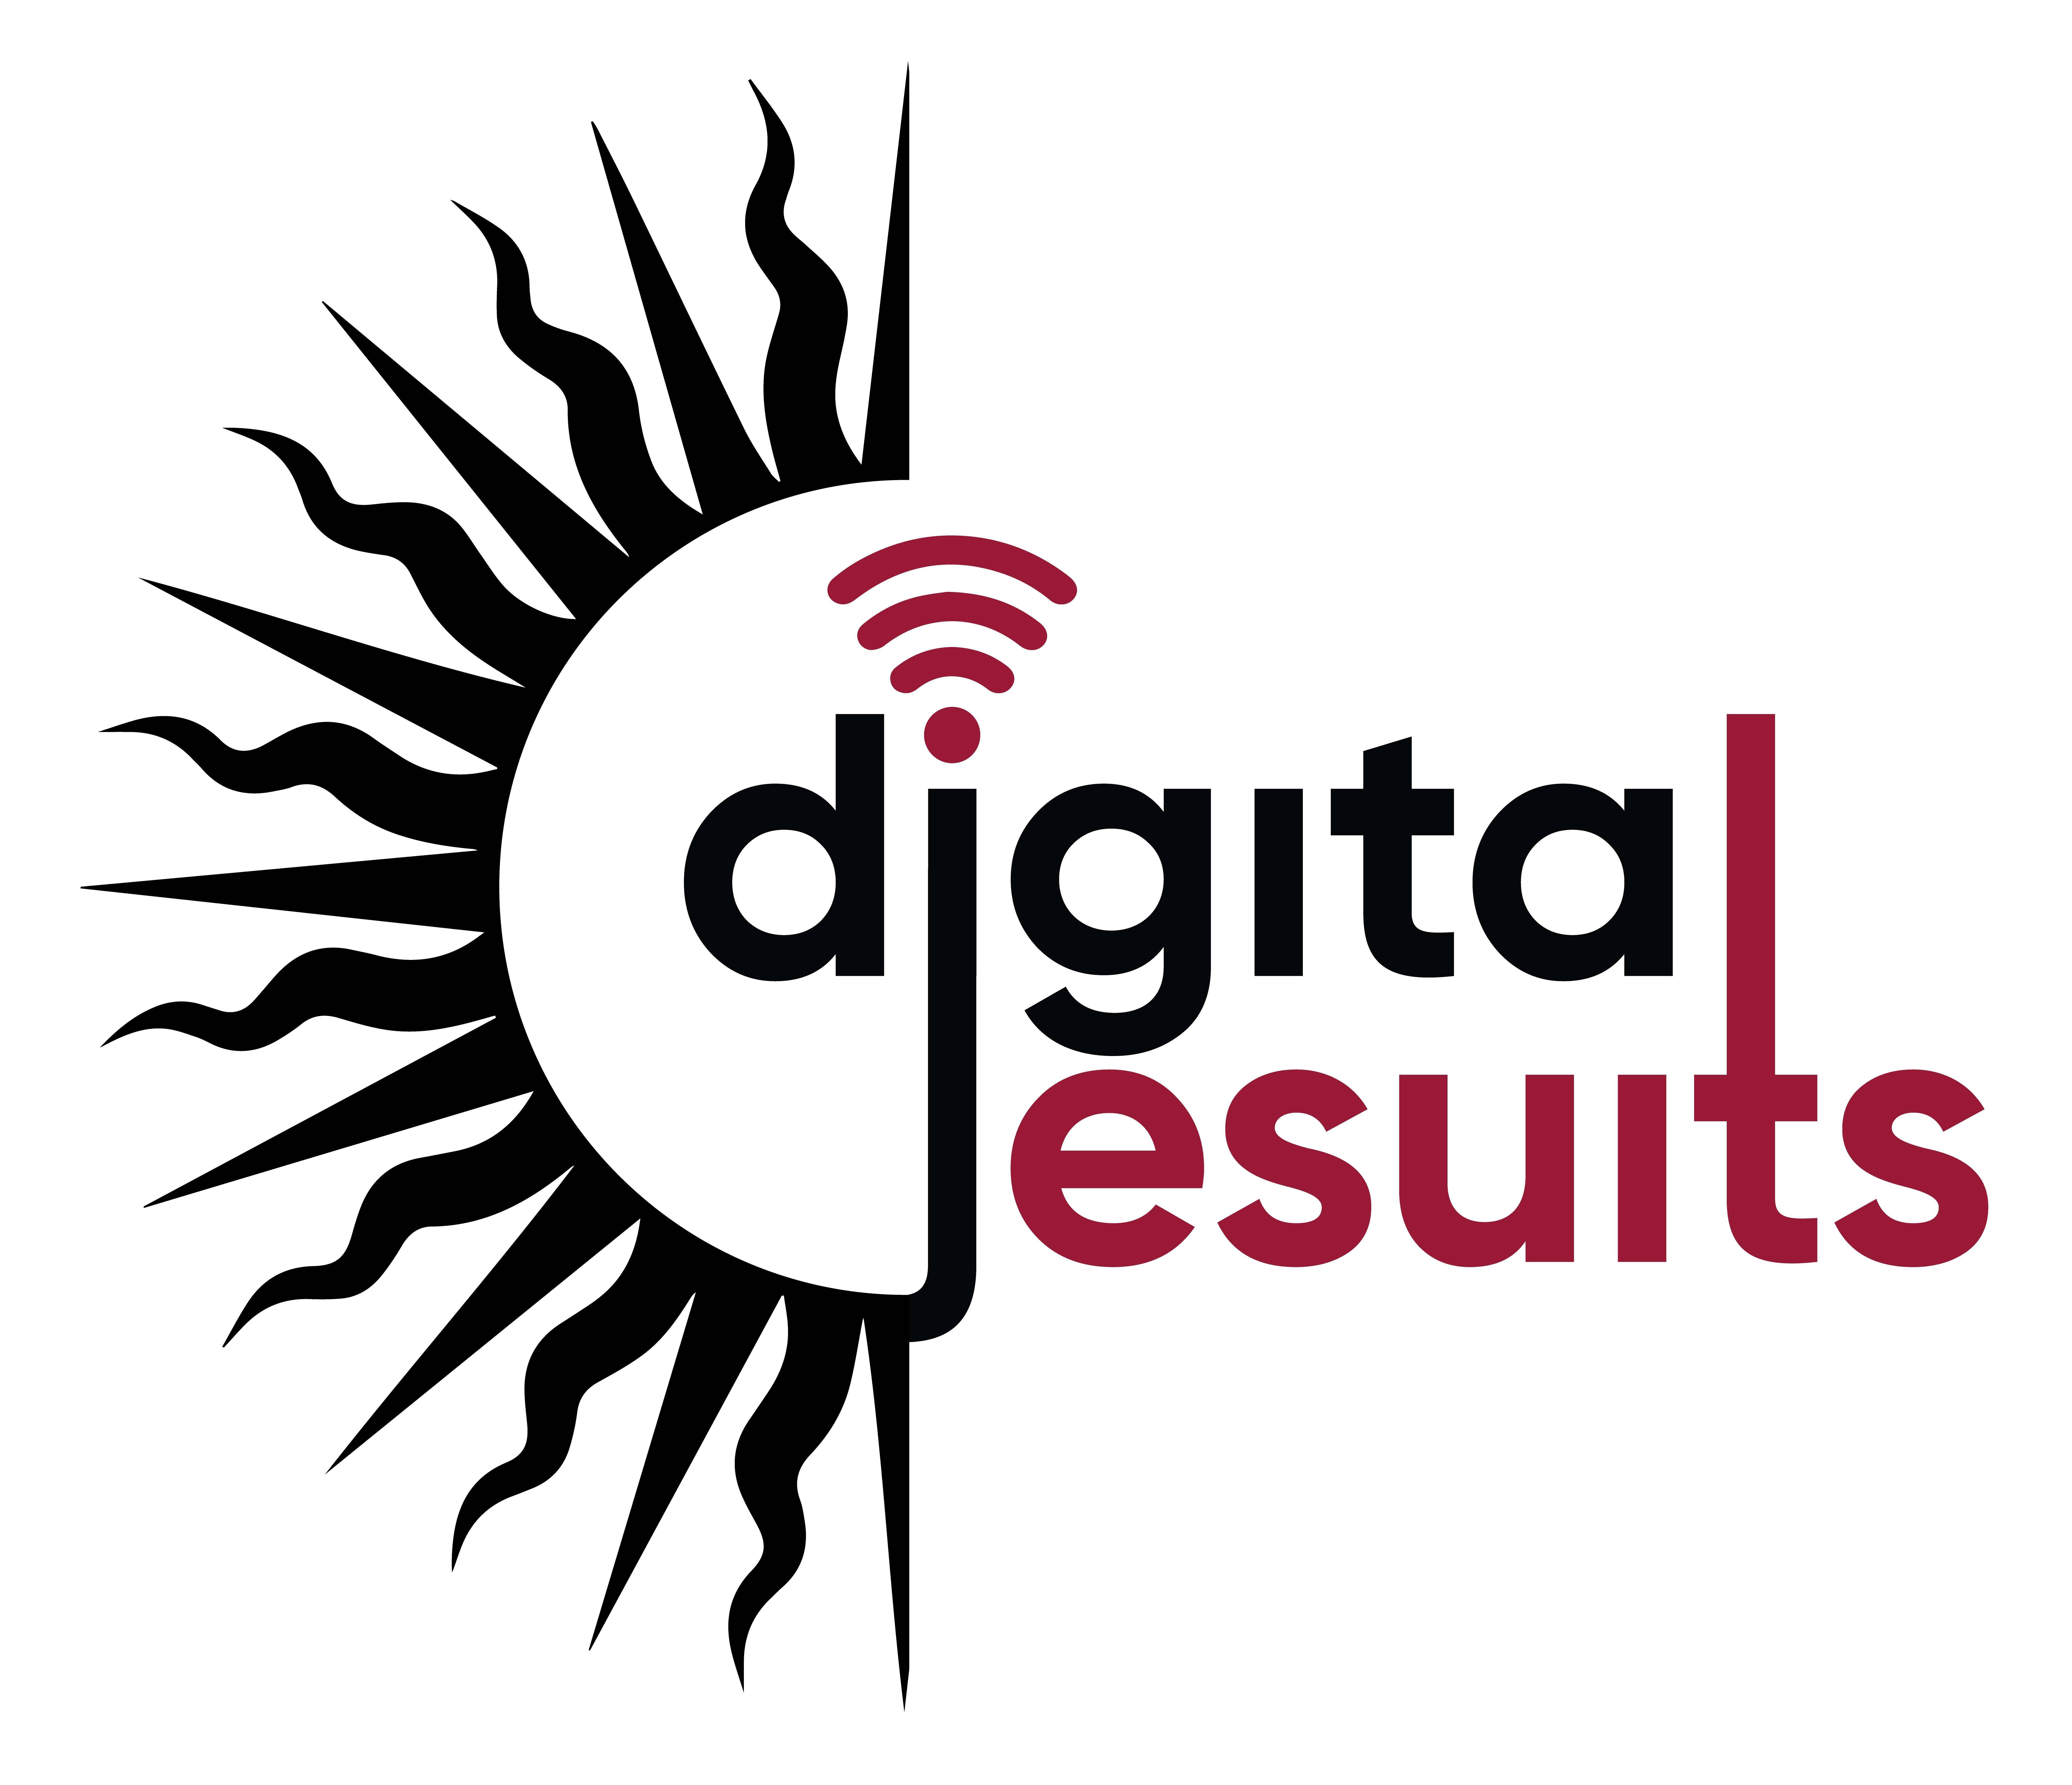 Digital Jesuits